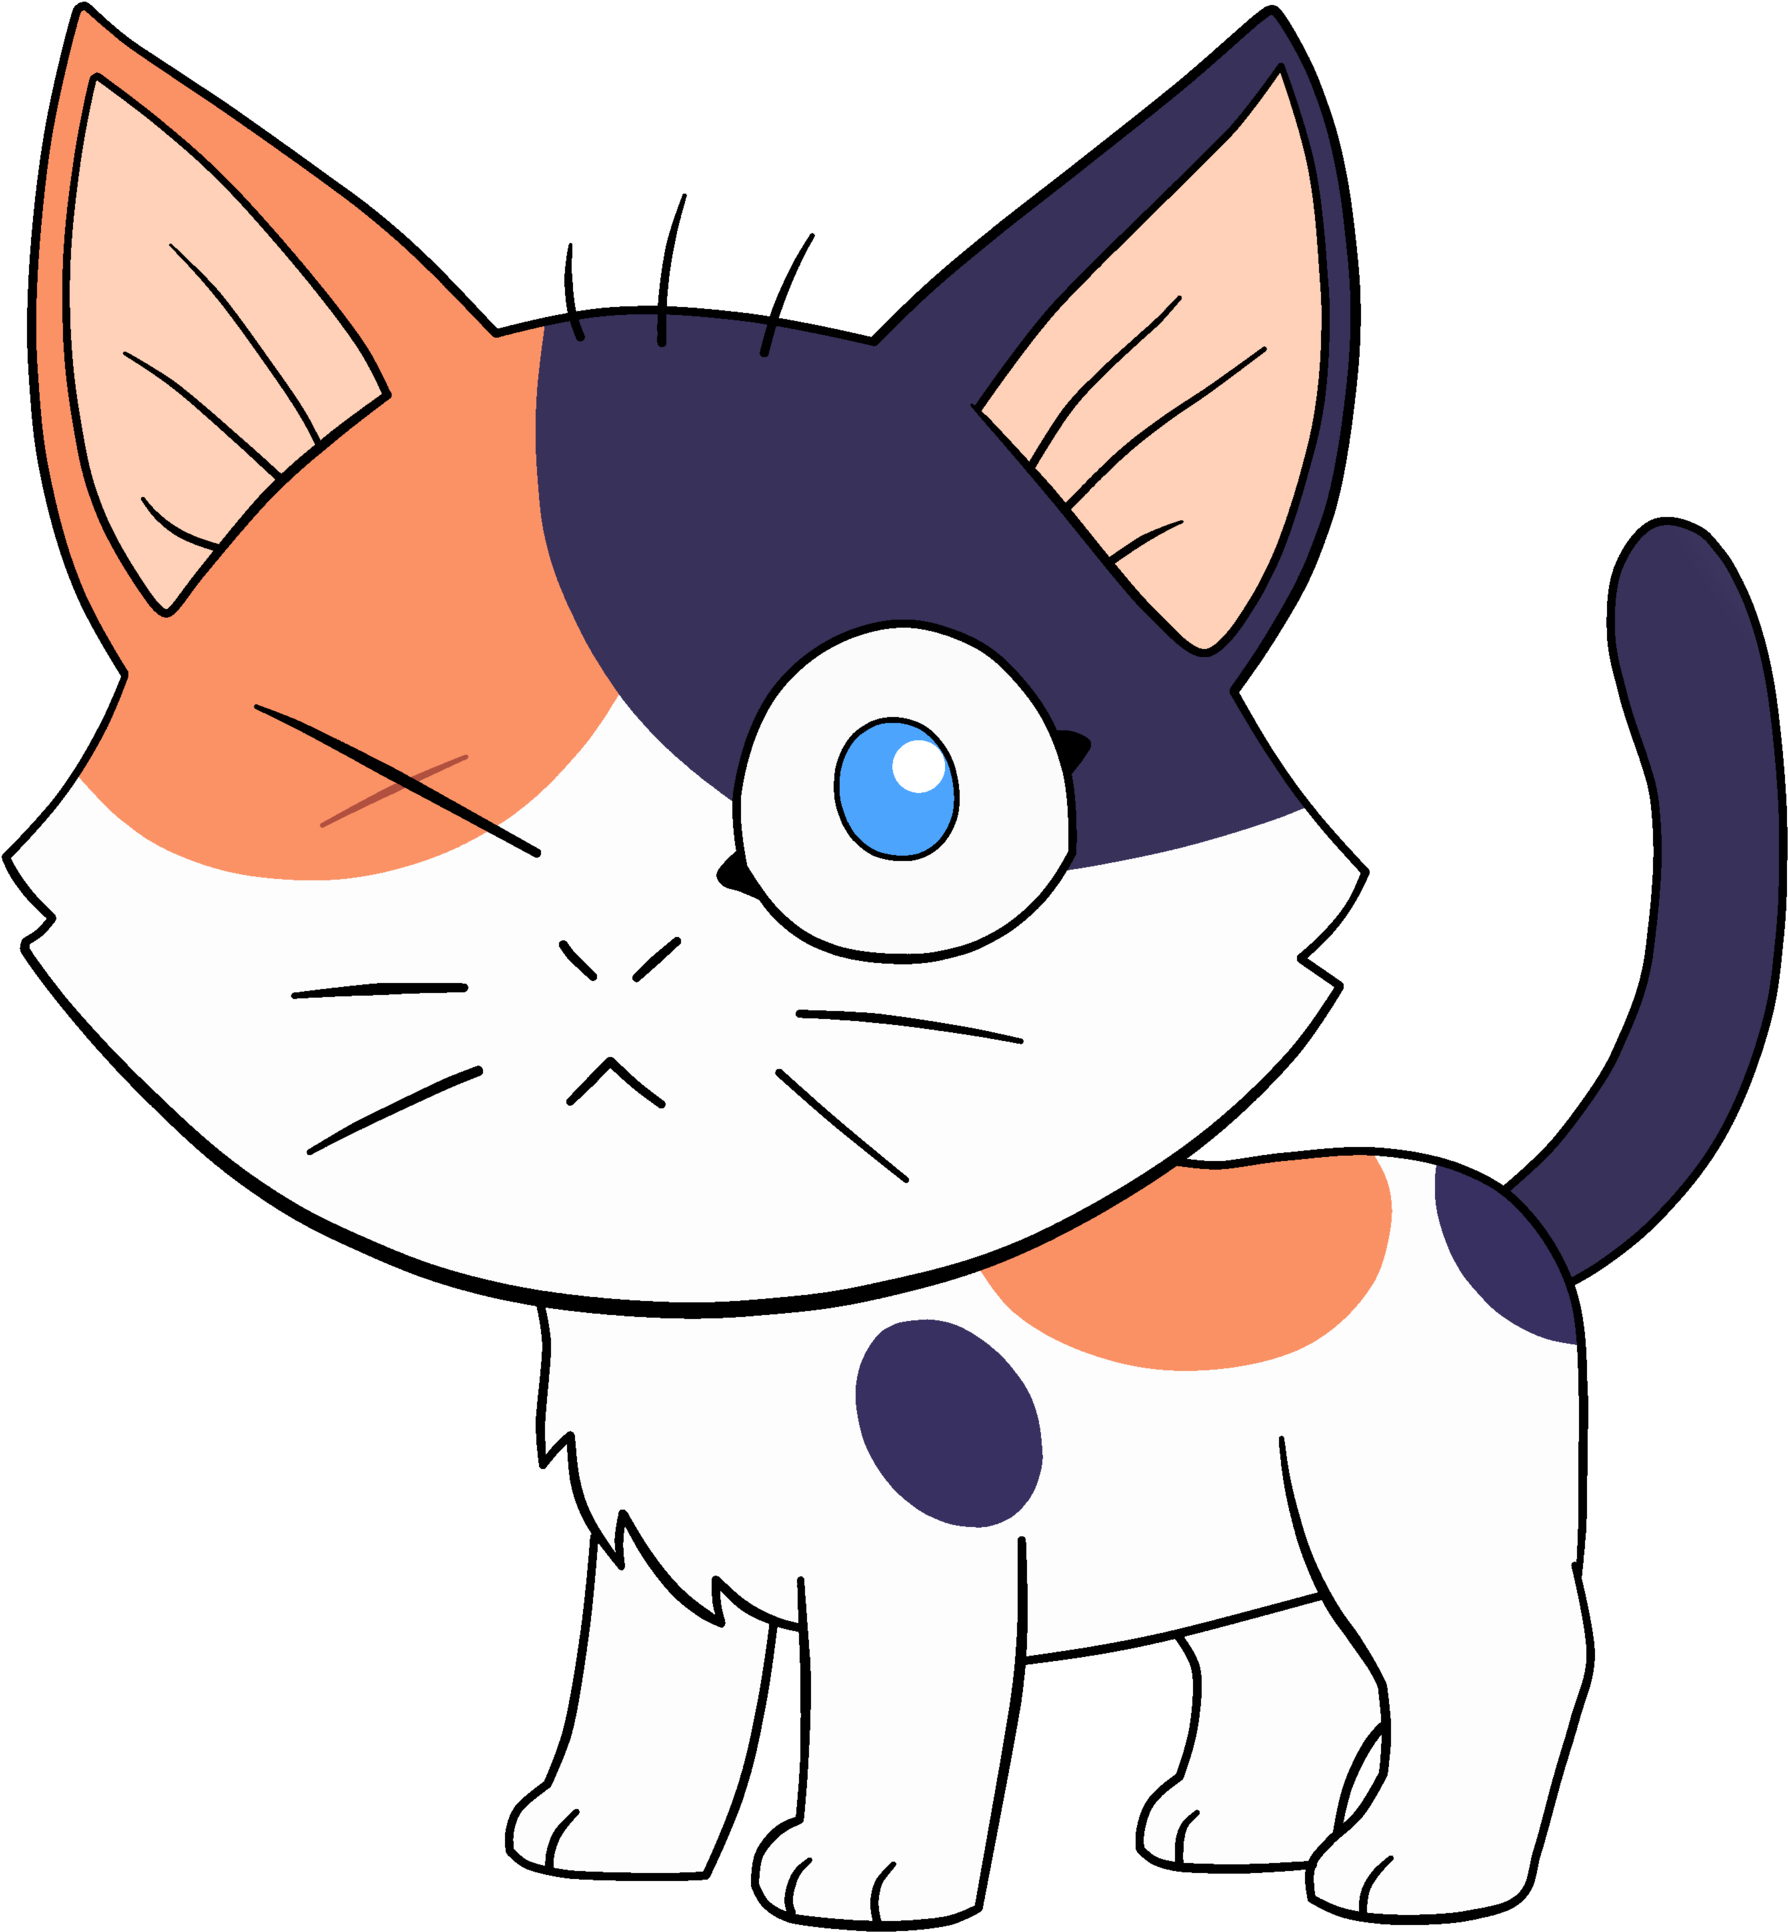 A Cartoon Cat With A Half-moon Eye